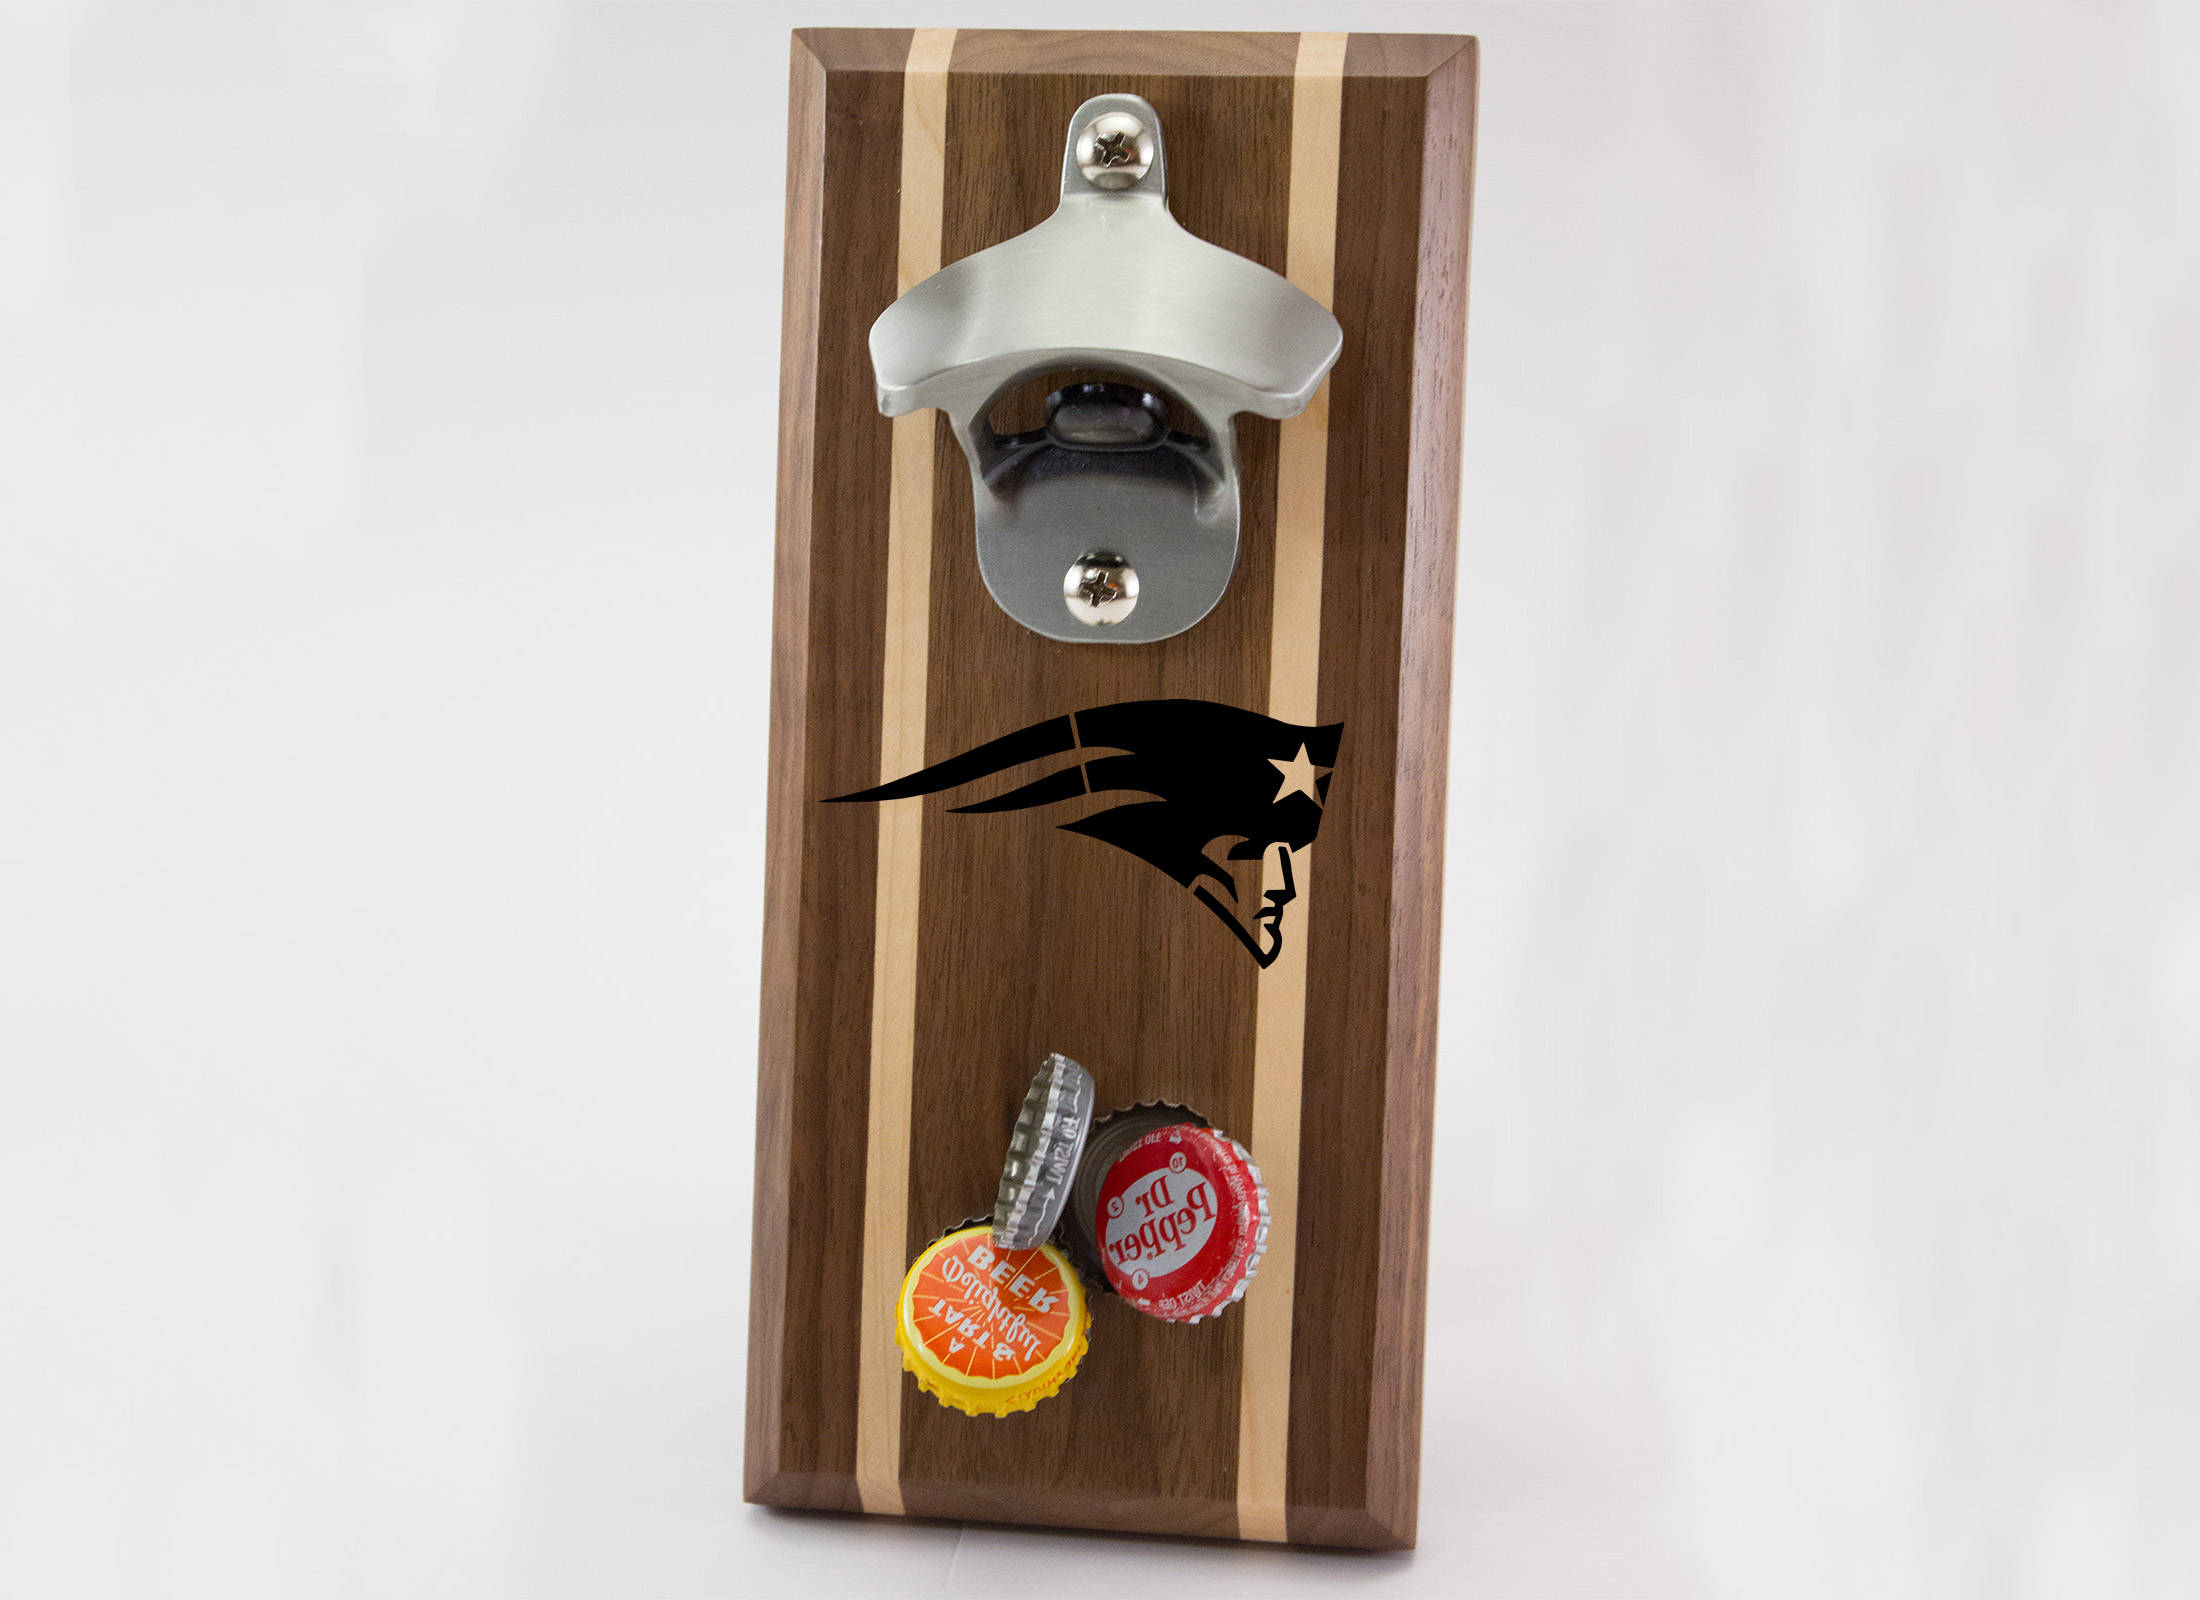 New England Patriots Magnetic Bottle Opener – Rockford Woodcrafts